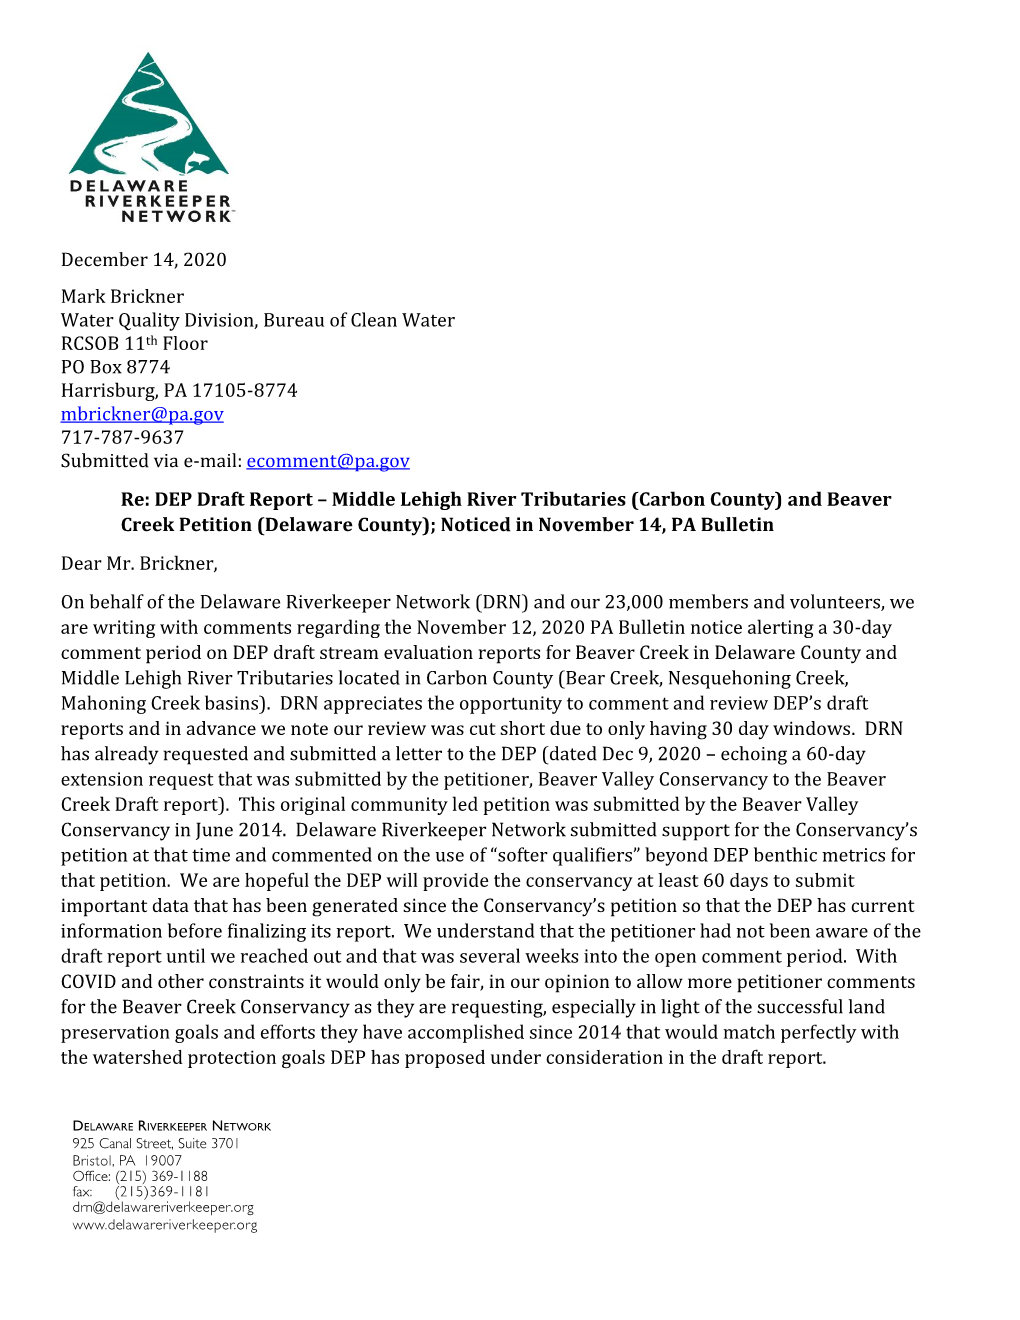 DRN Ltr Middle Lehigh, Beaver Creek DEP Draft Report